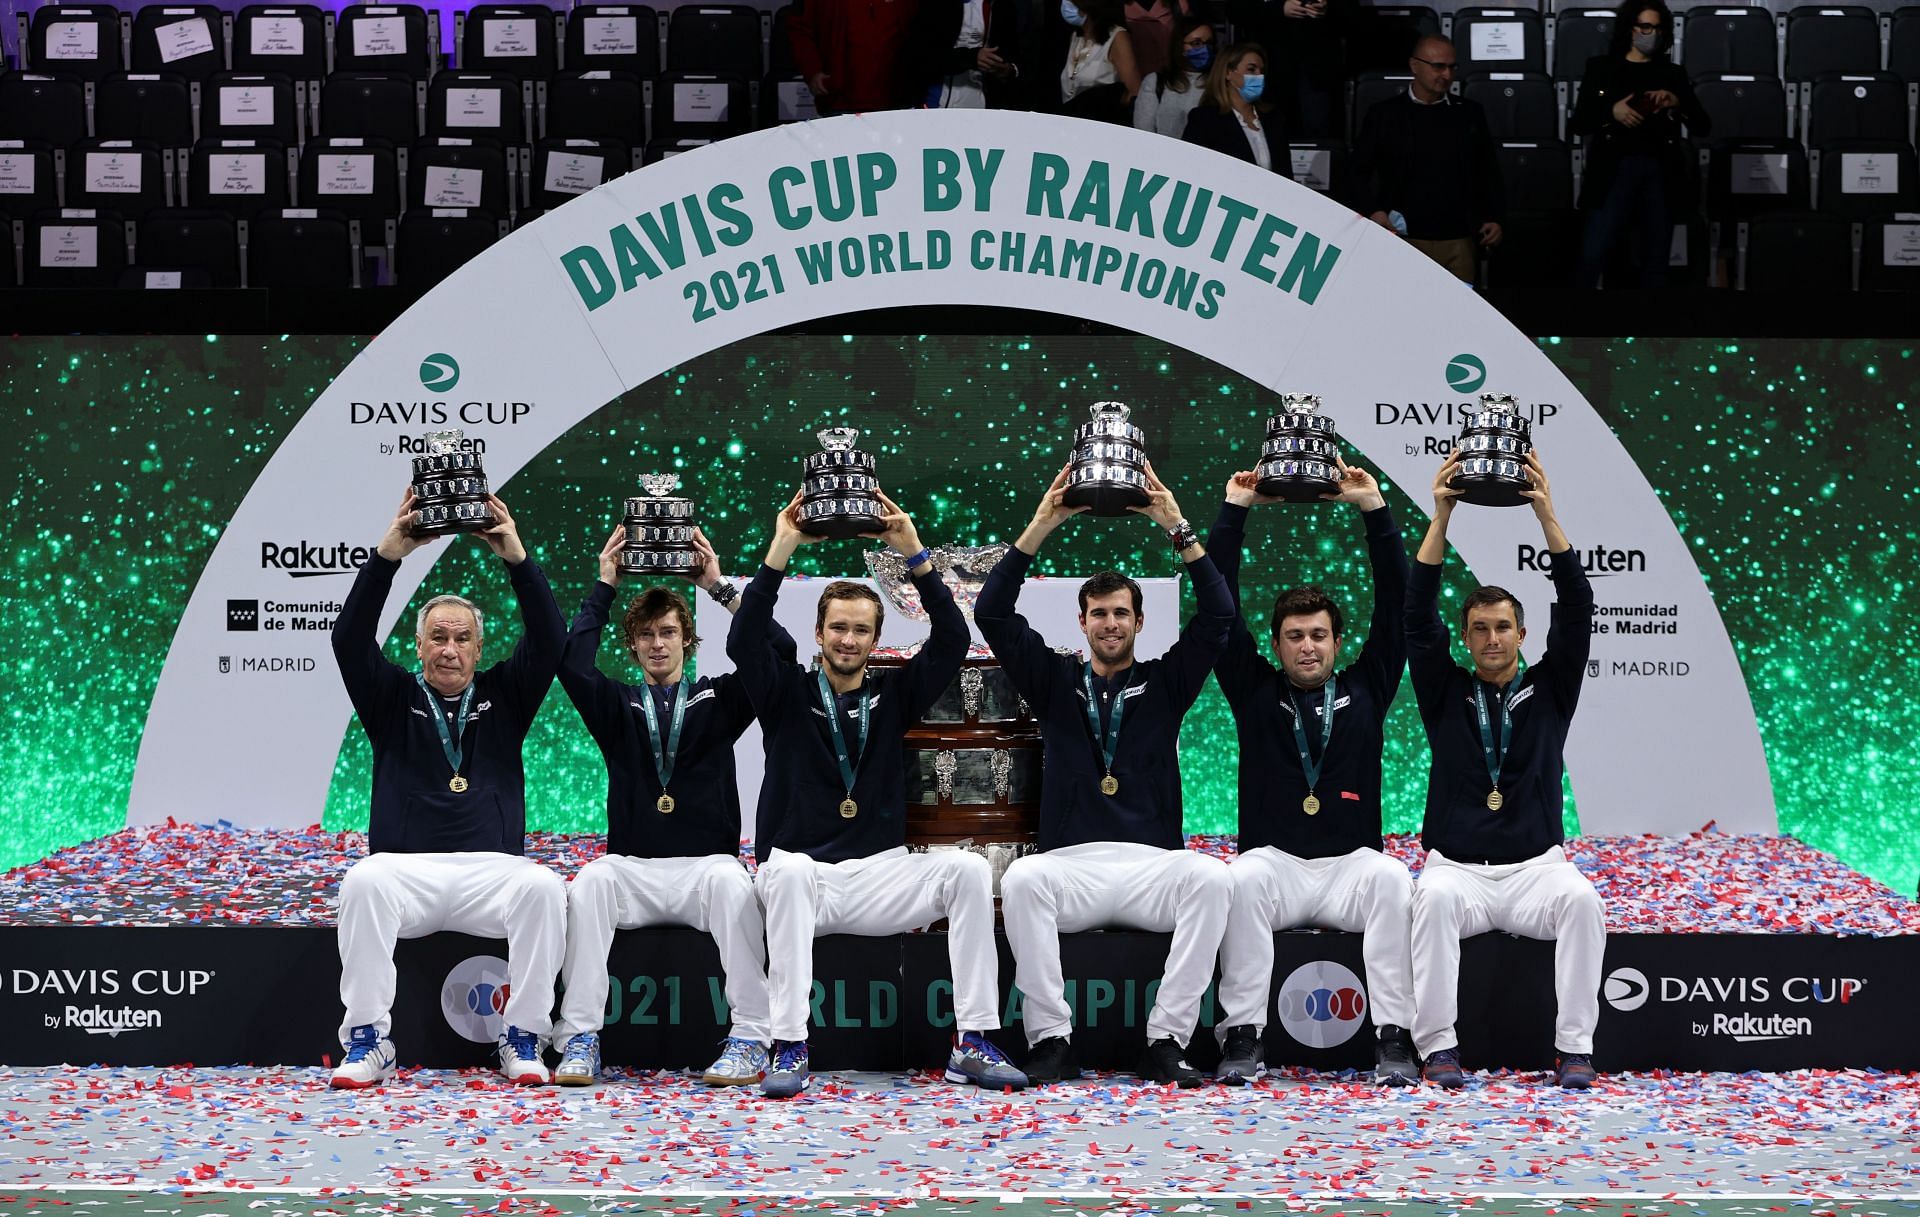 The Russian Tennis Federation team celebrate their Davis Cup triumph last year